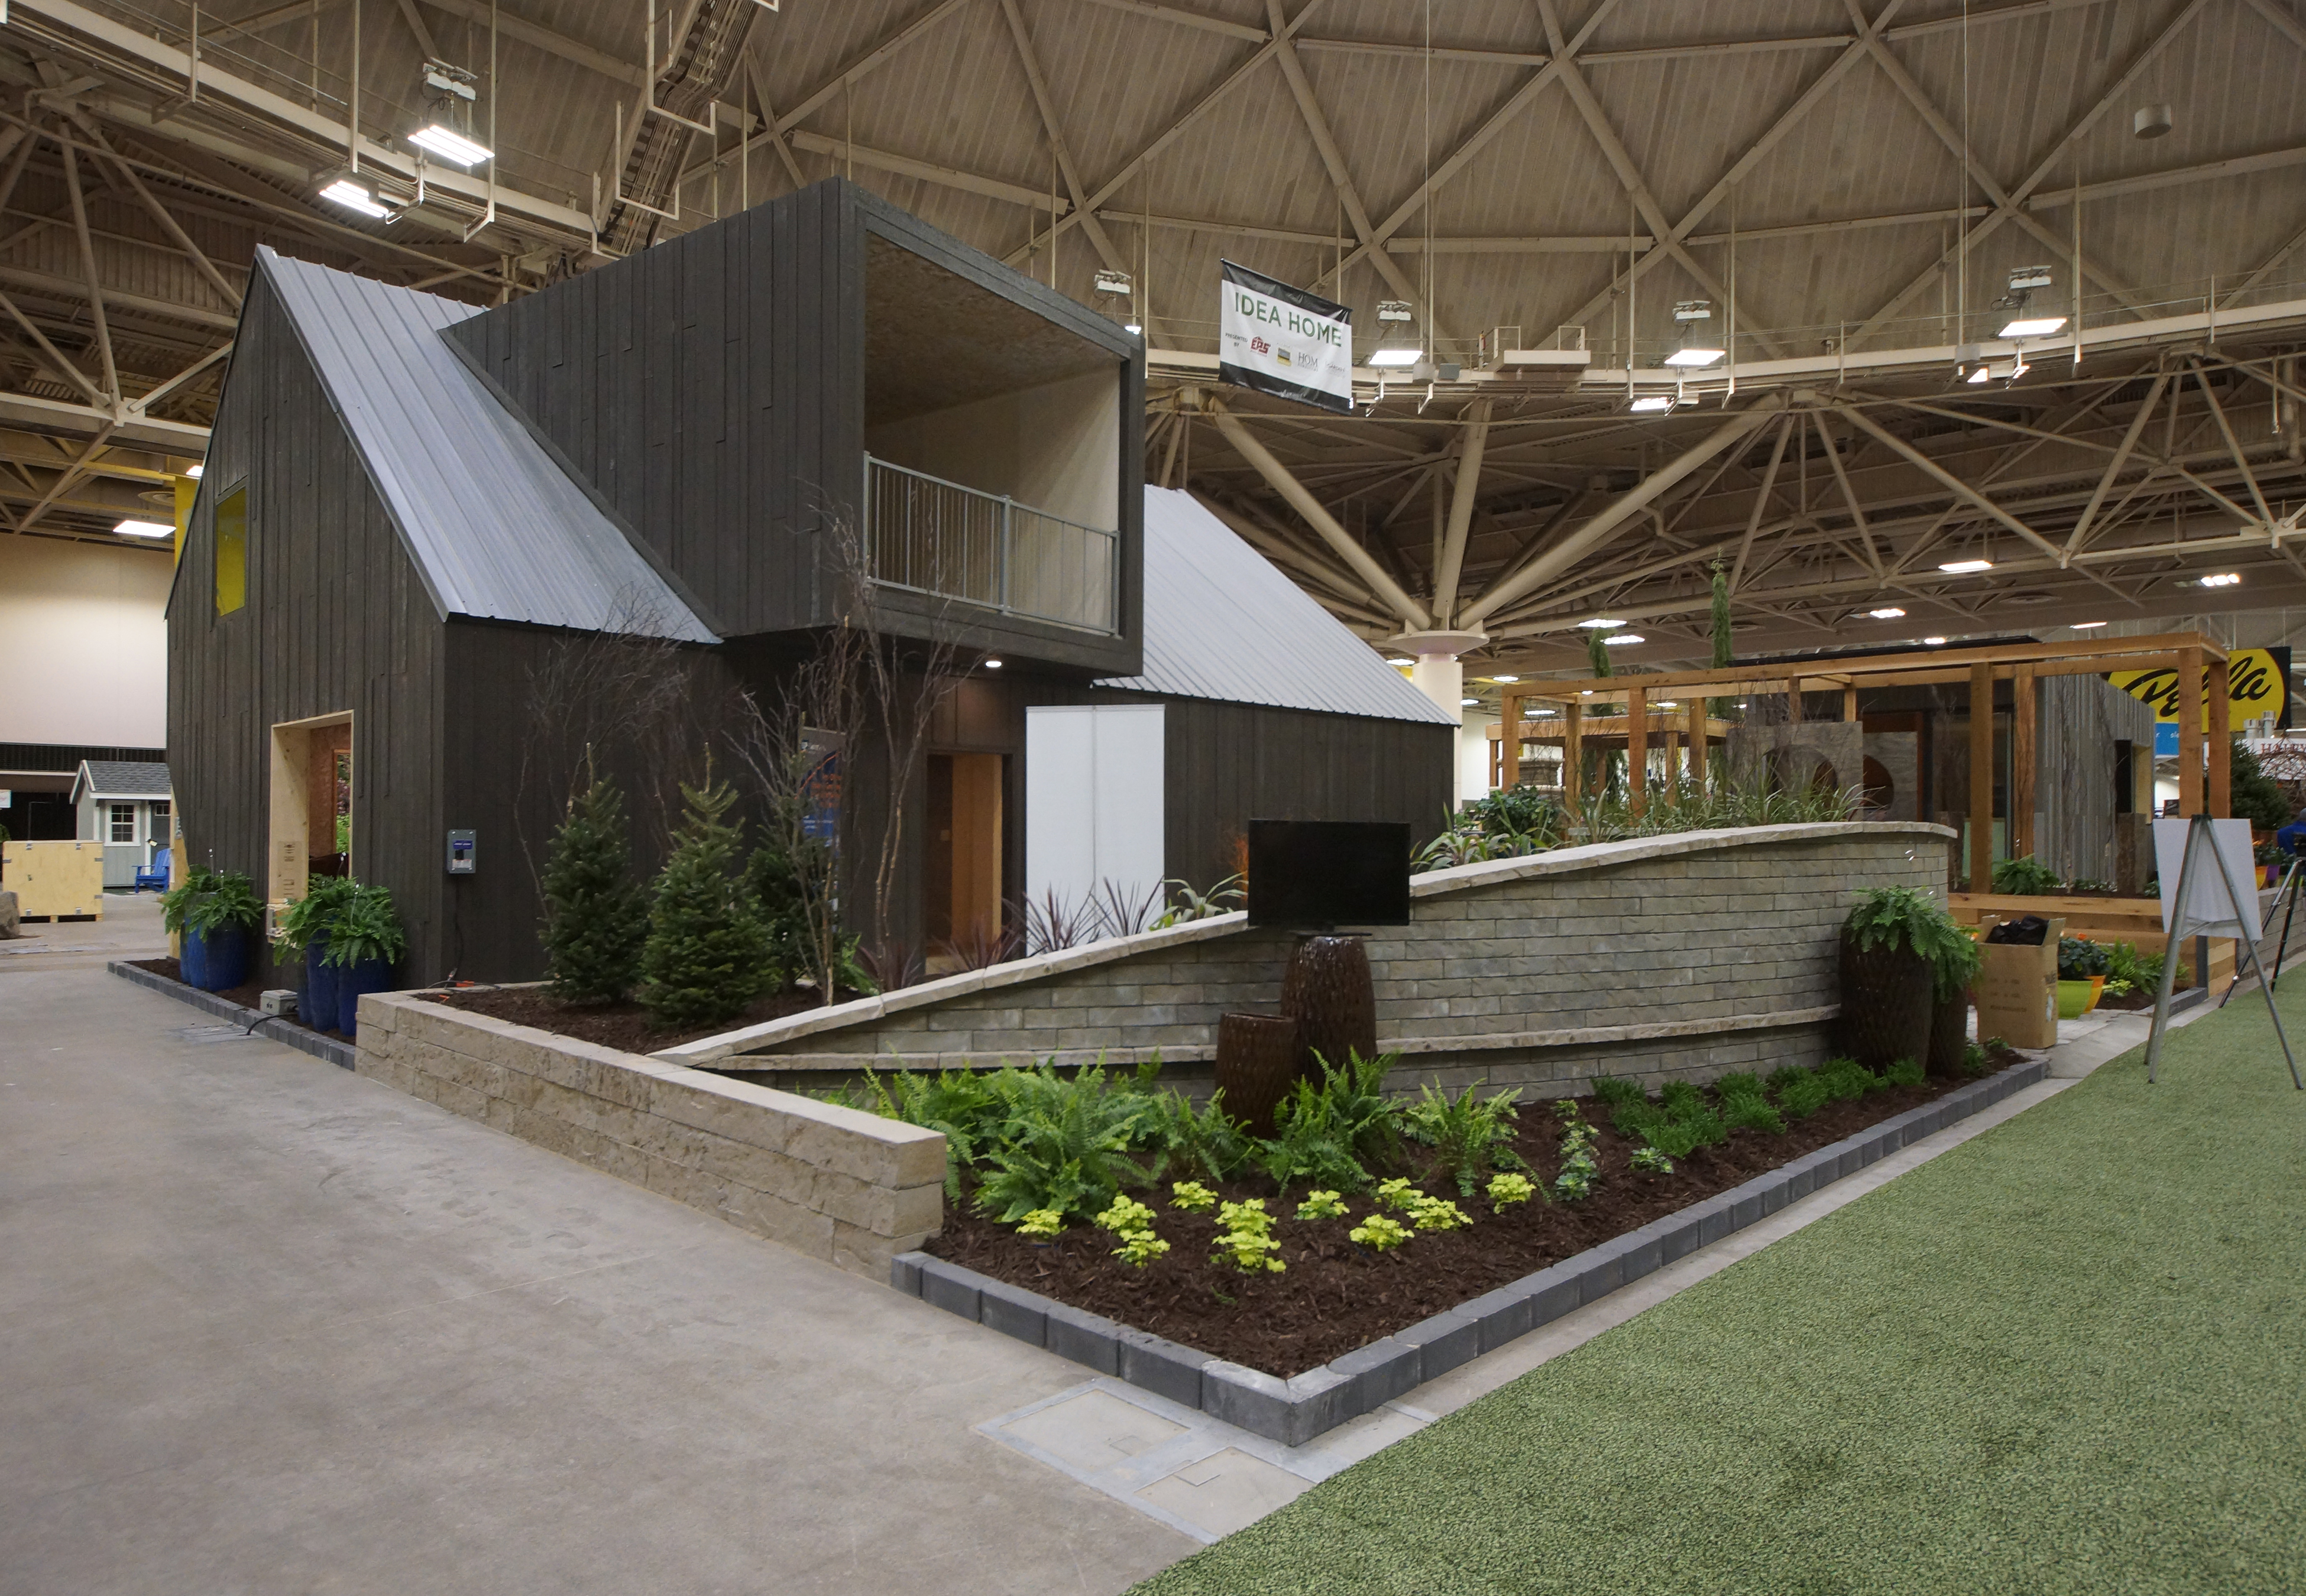 Eps Builds Idea Home At The 2016 Minneapolis Home Garden Show